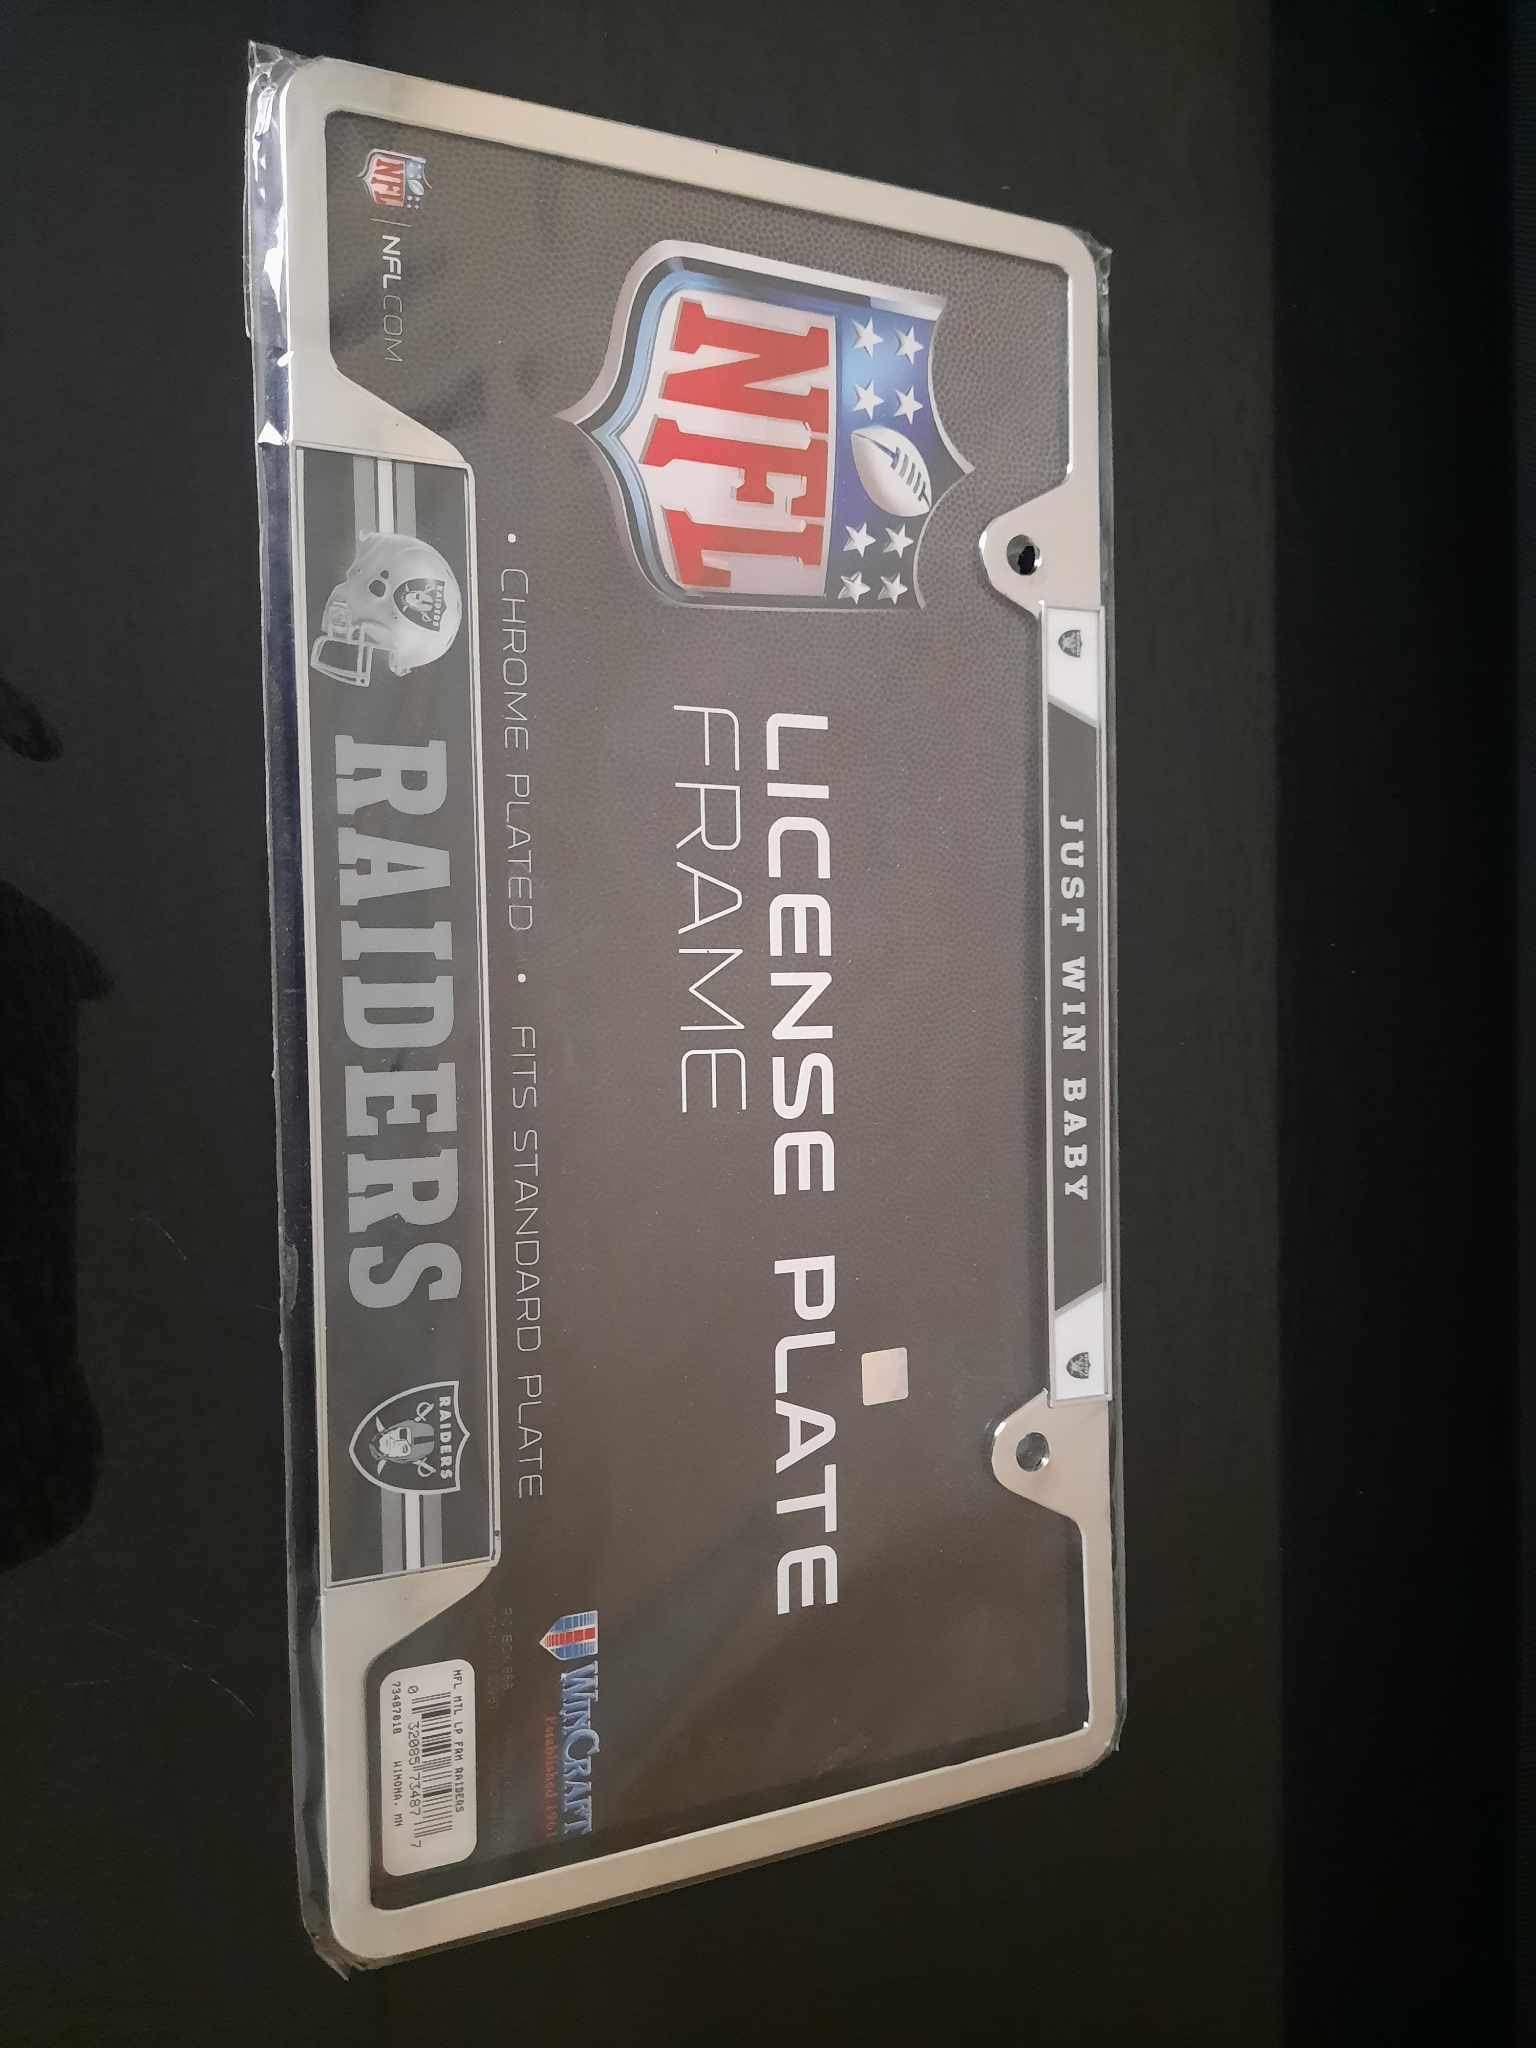 NFL - Las Vegas Raiders License Plate Frame